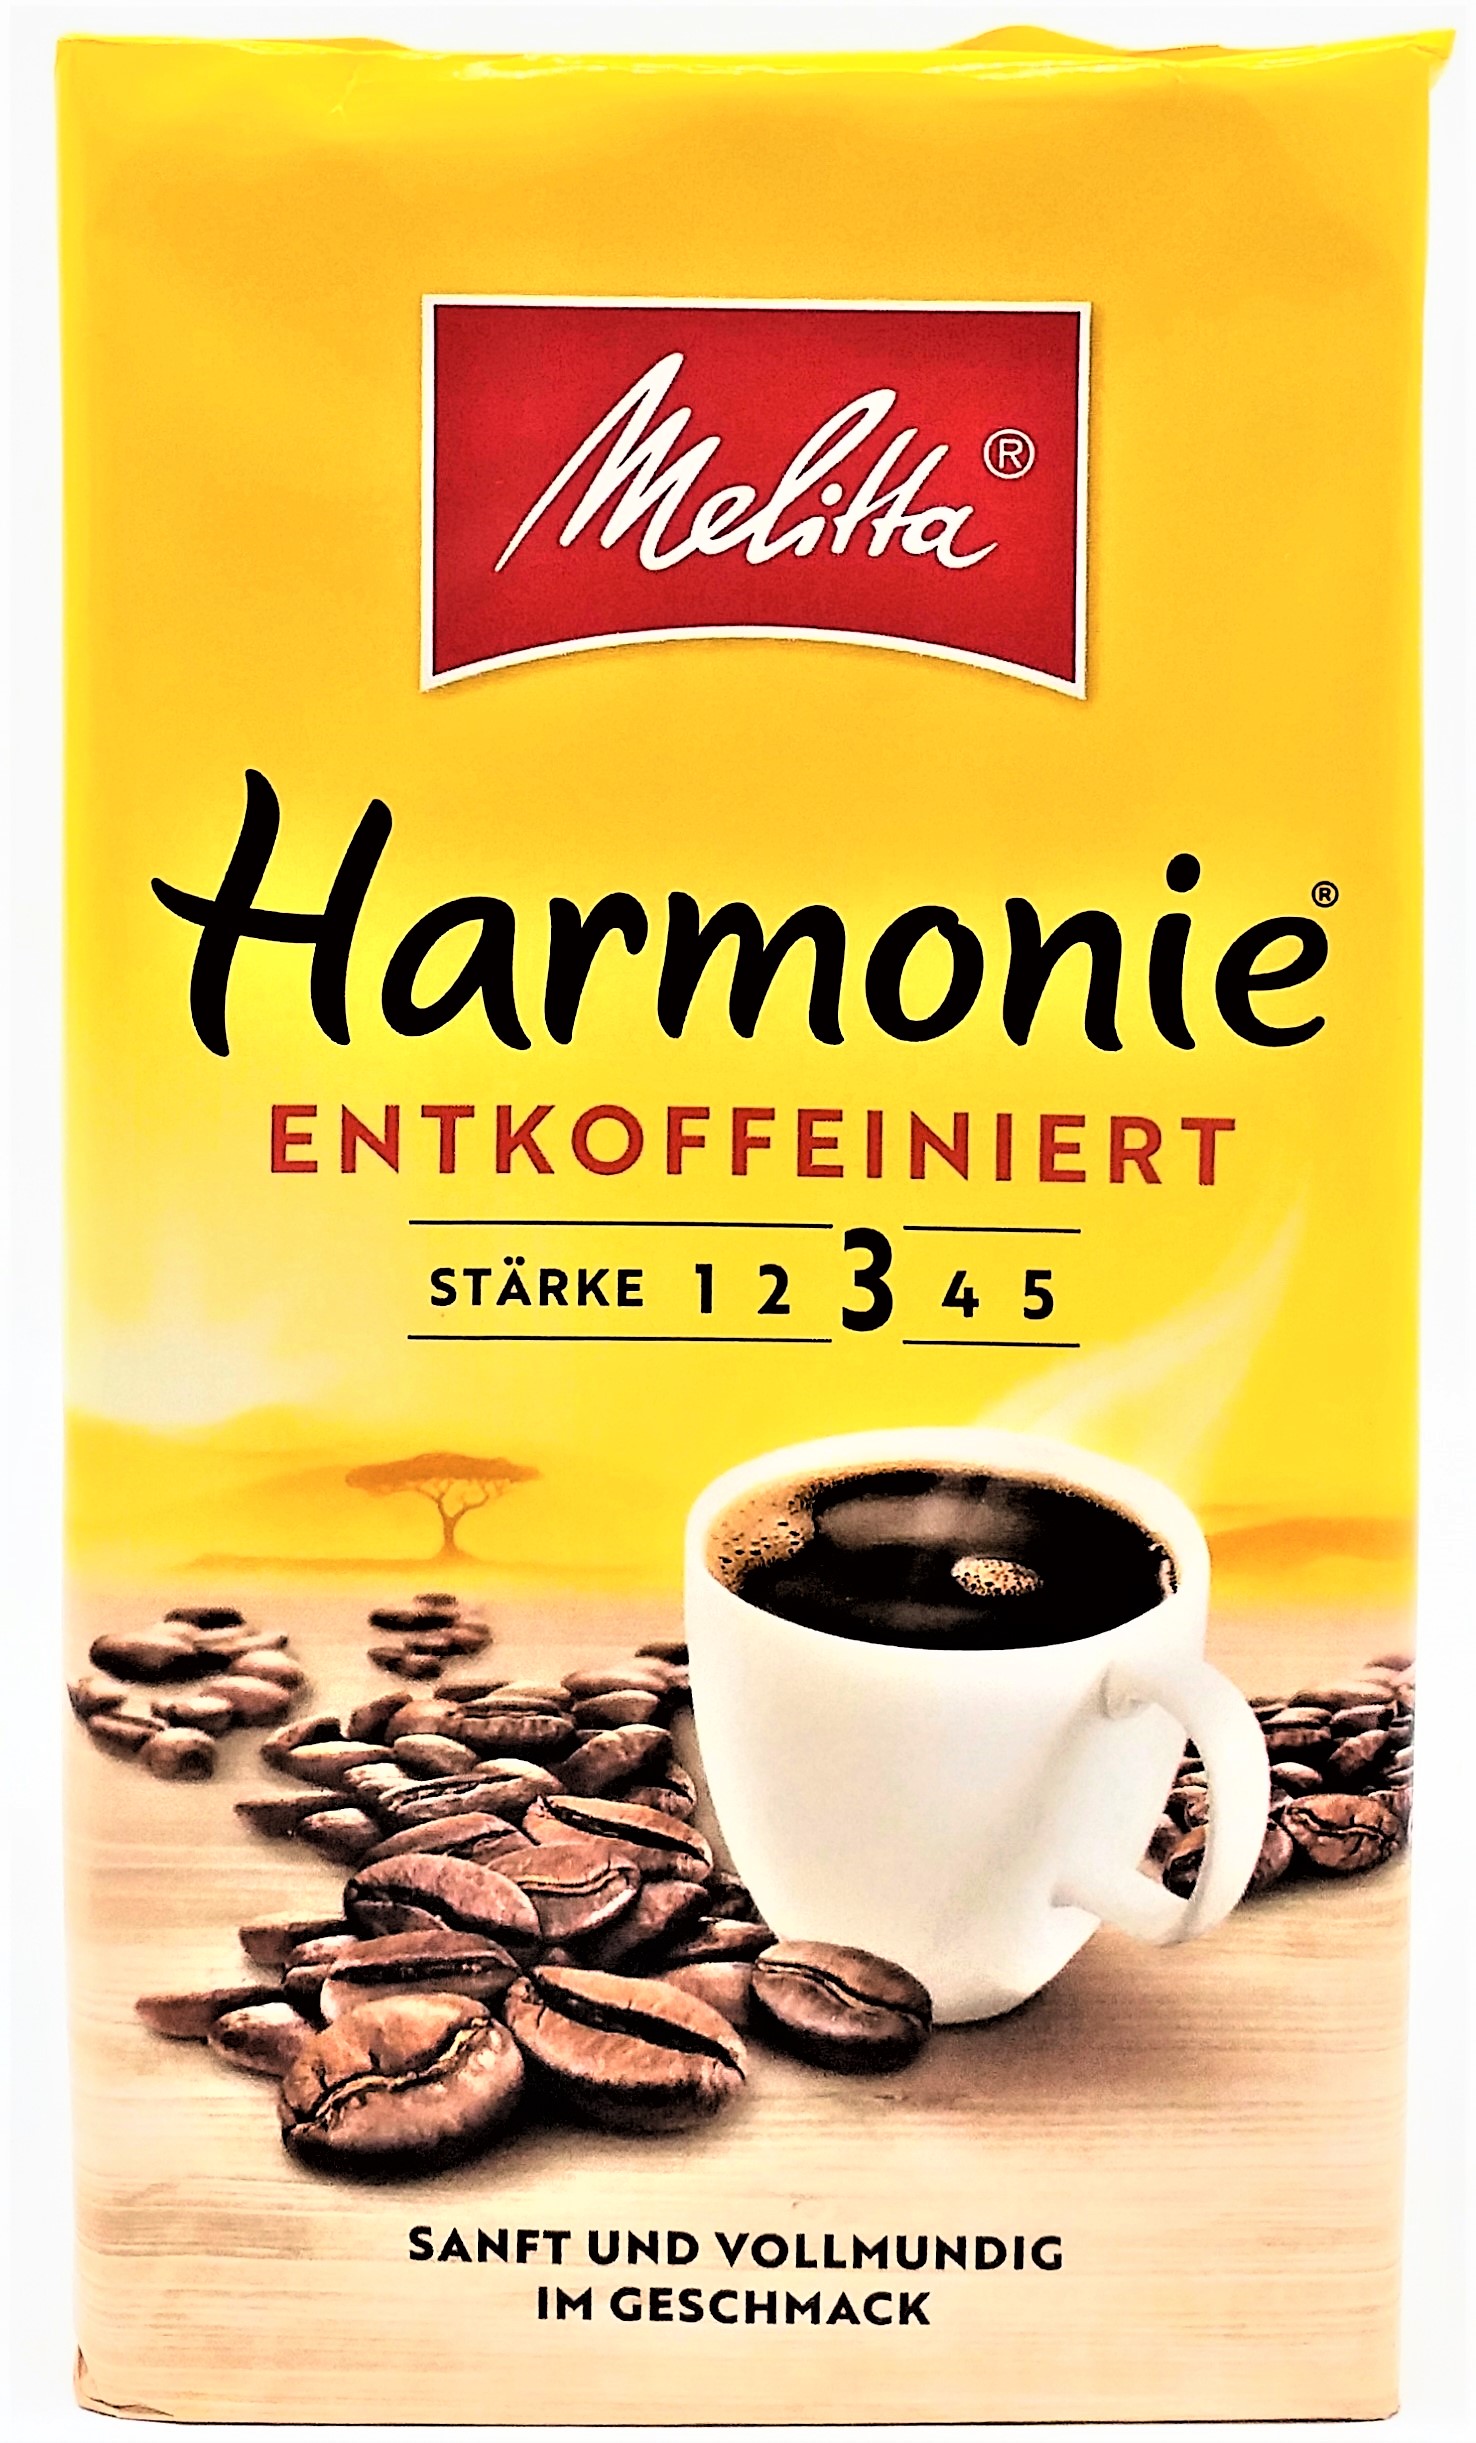 Melitta Cafe Harmonie Entcoffeiniert 500g